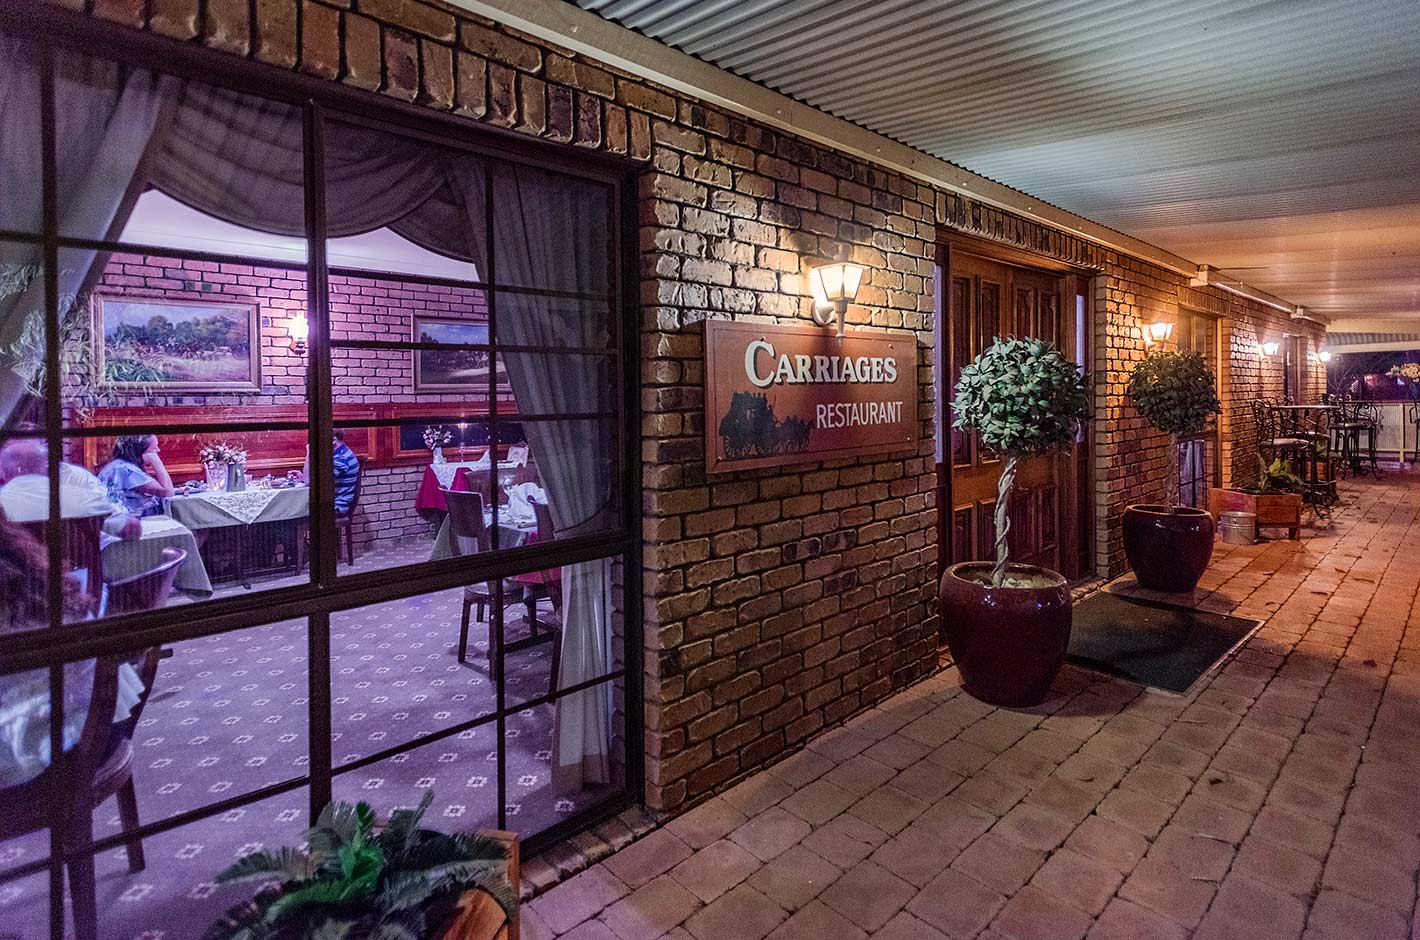 The Overlander Homestead Motel Roma Queensland